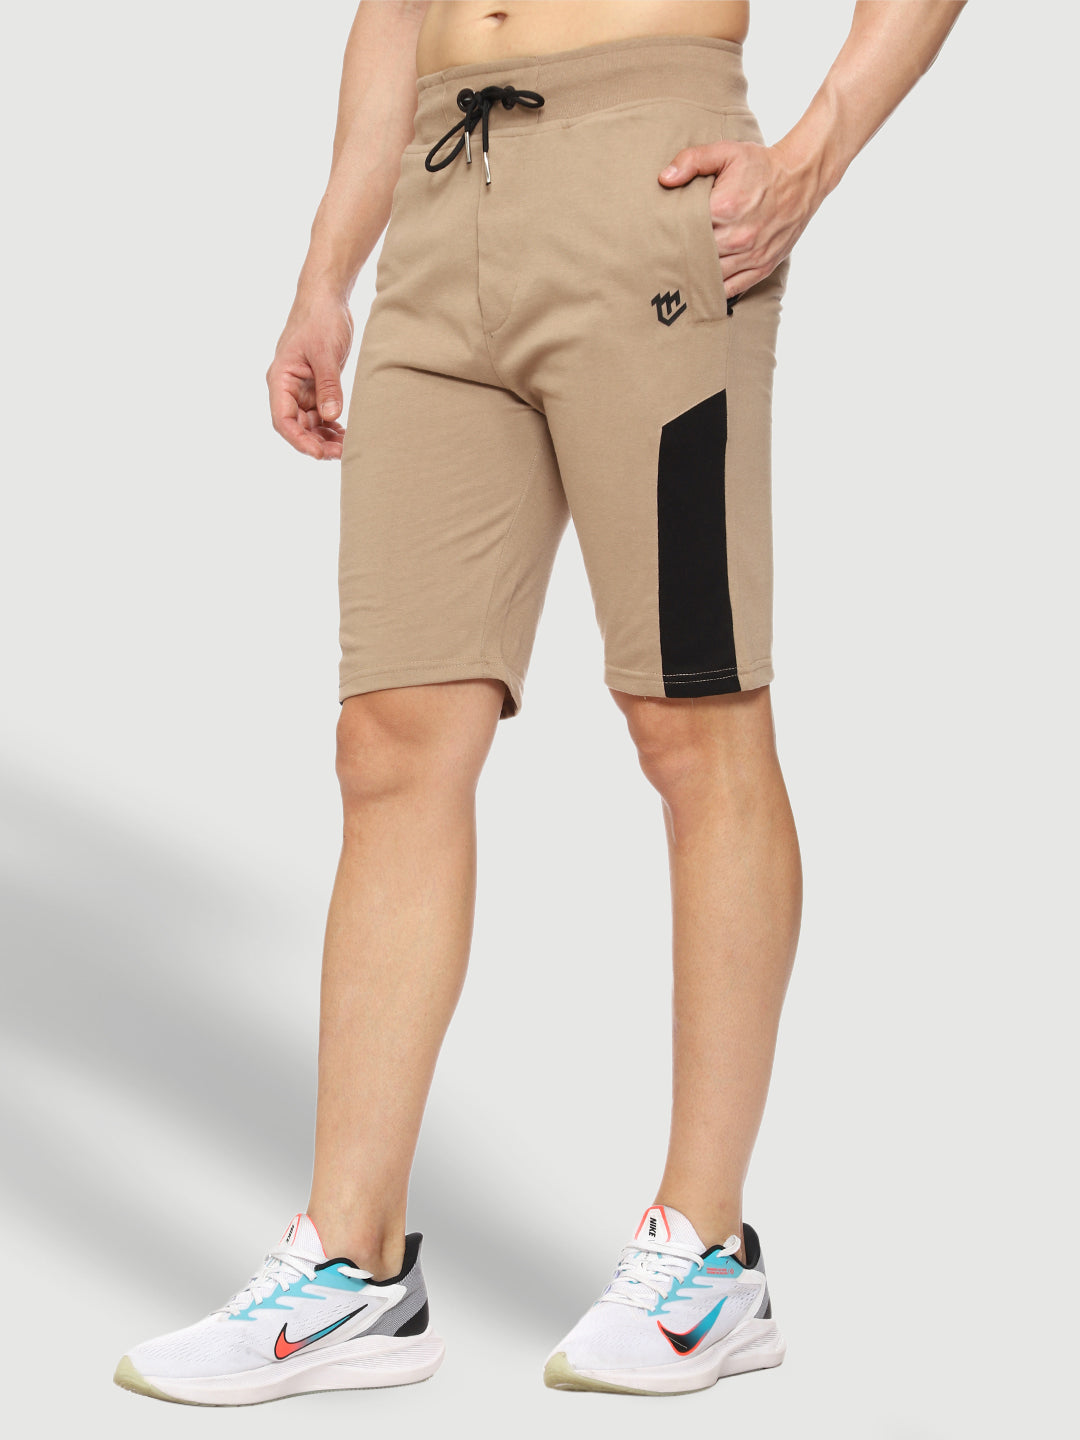 Stylish Beige Shorts For Men